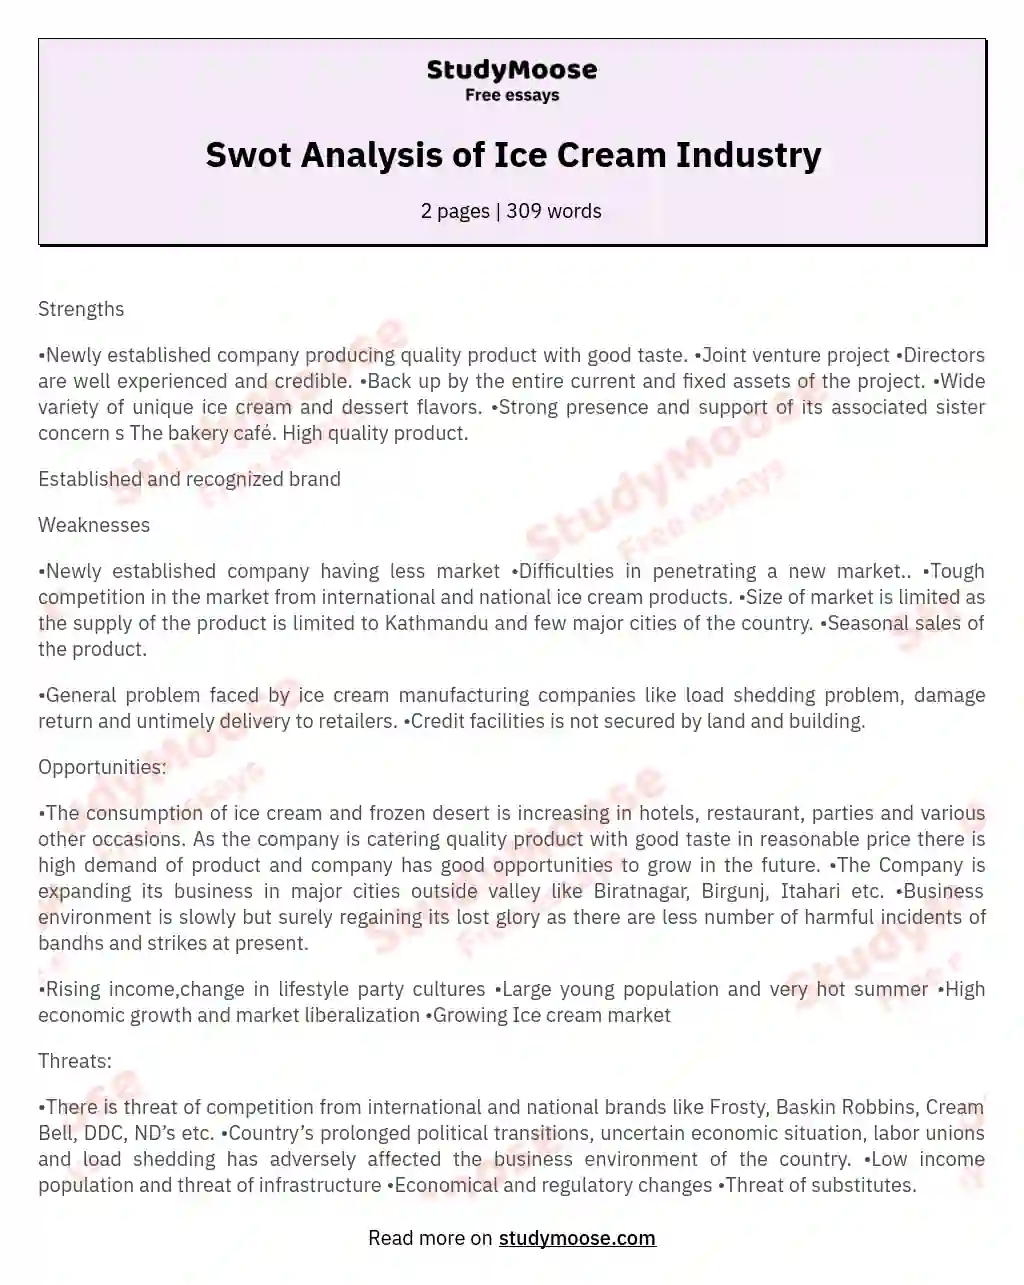 Swot Analysis of Ice Cream Industry essay